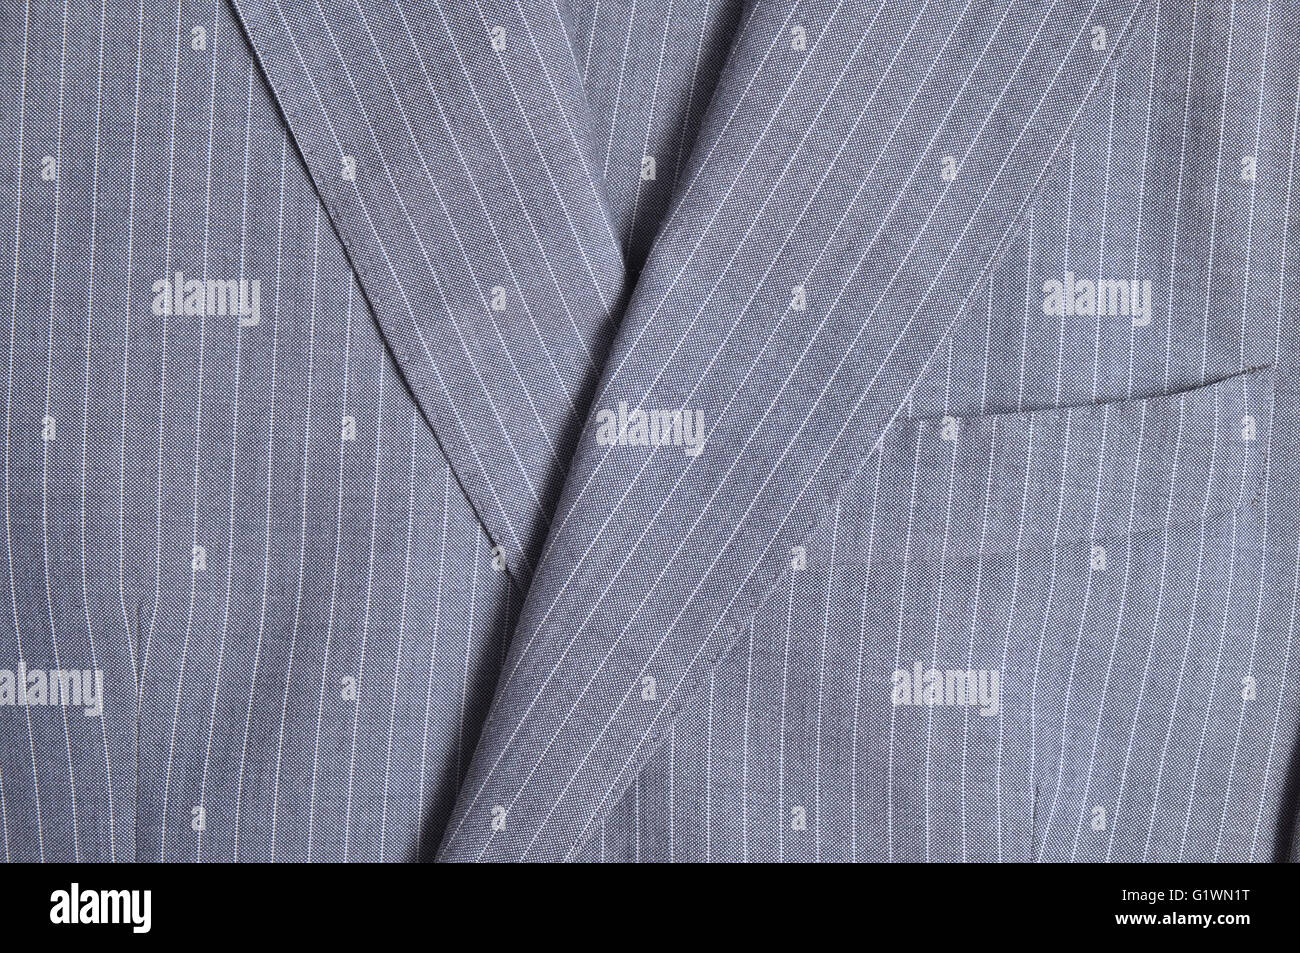 Klassisch grau gestreiften Anzug. Mode und Klassik-trends Stockfoto